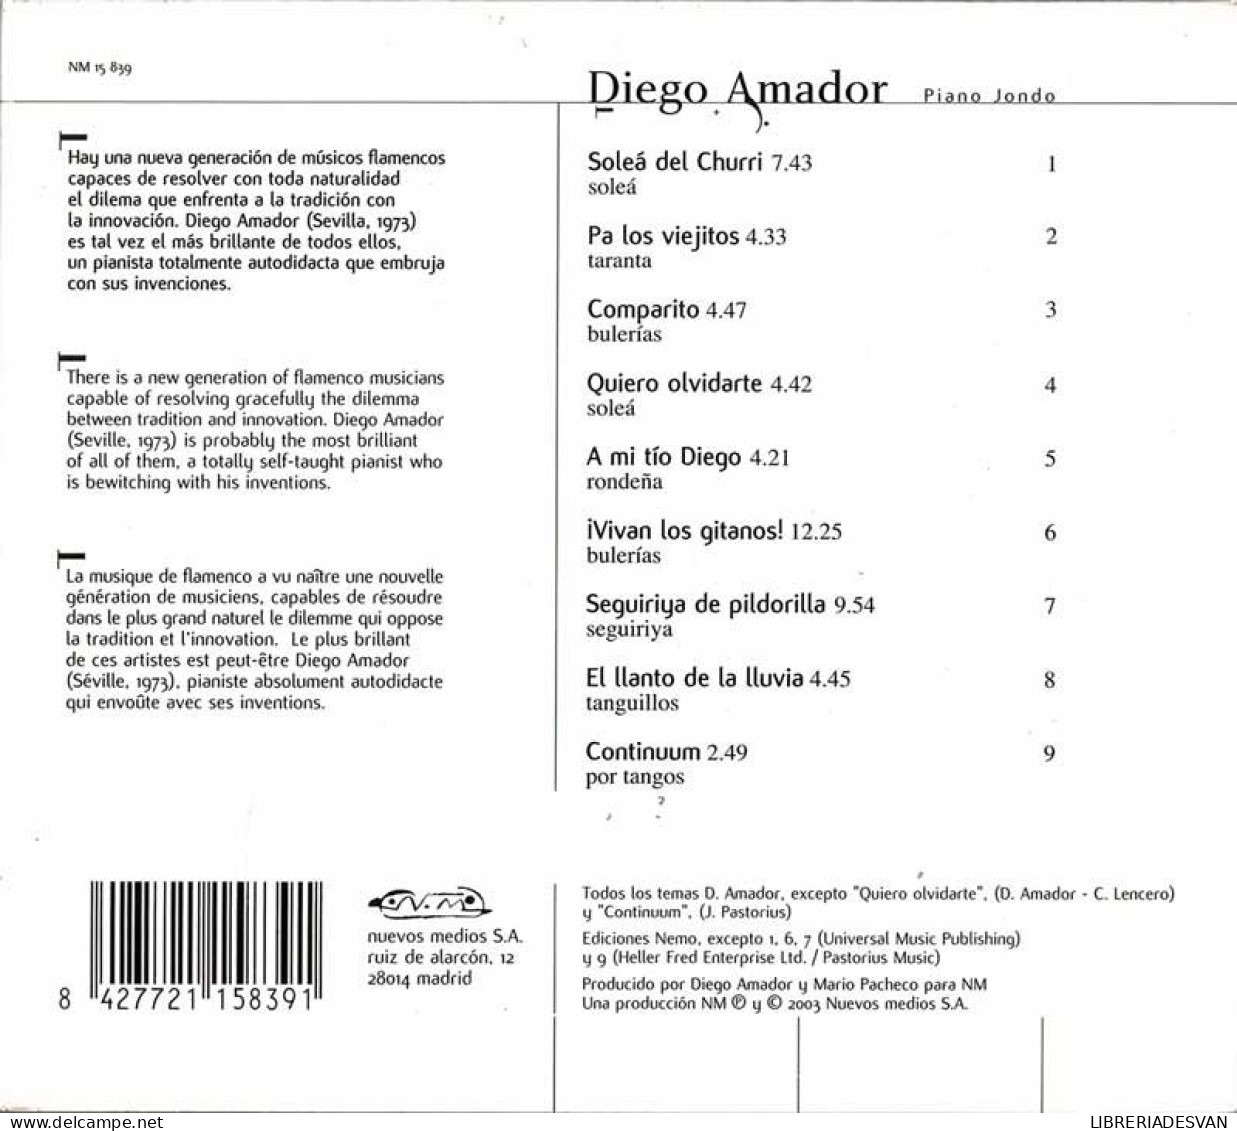 Diego Amador - Piano Jondo. CD - Other - Spanish Music